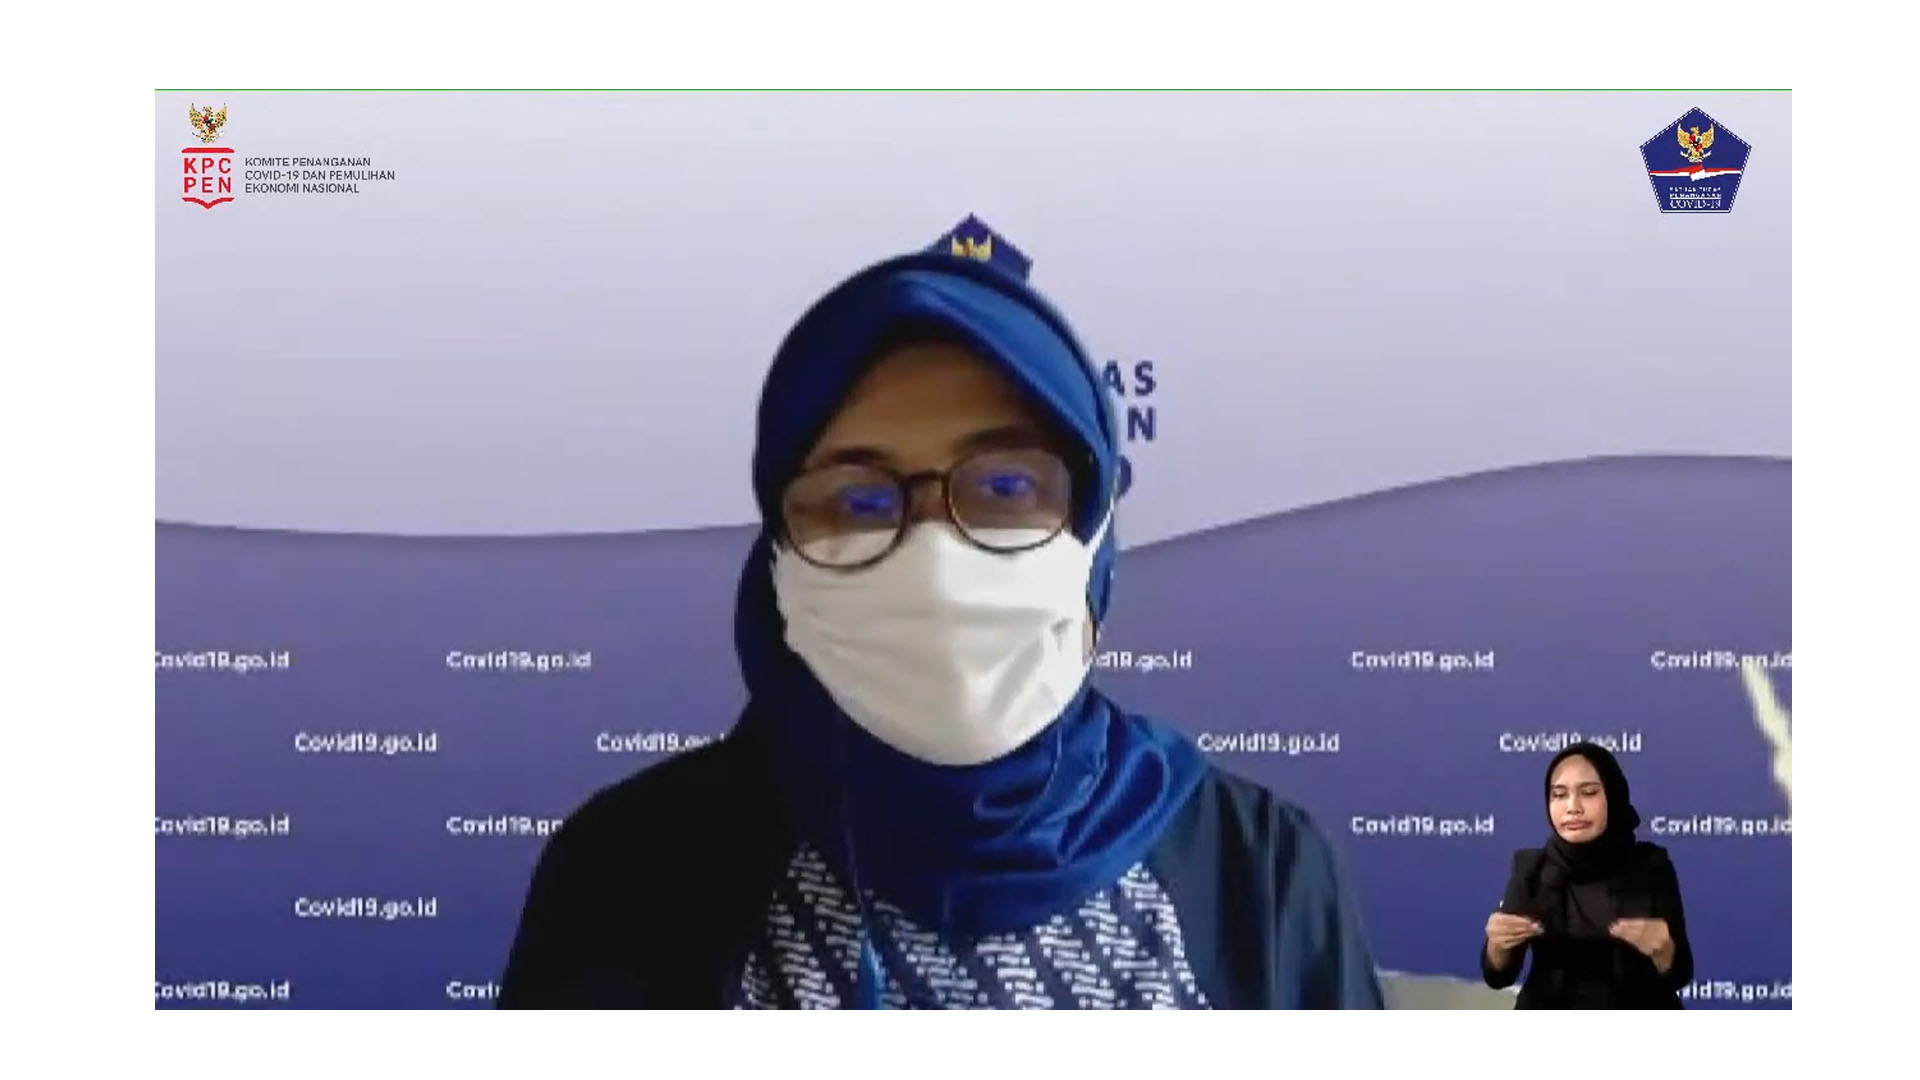 VIDEO: Bagaimana Cara Mengolah Limbah Masker?